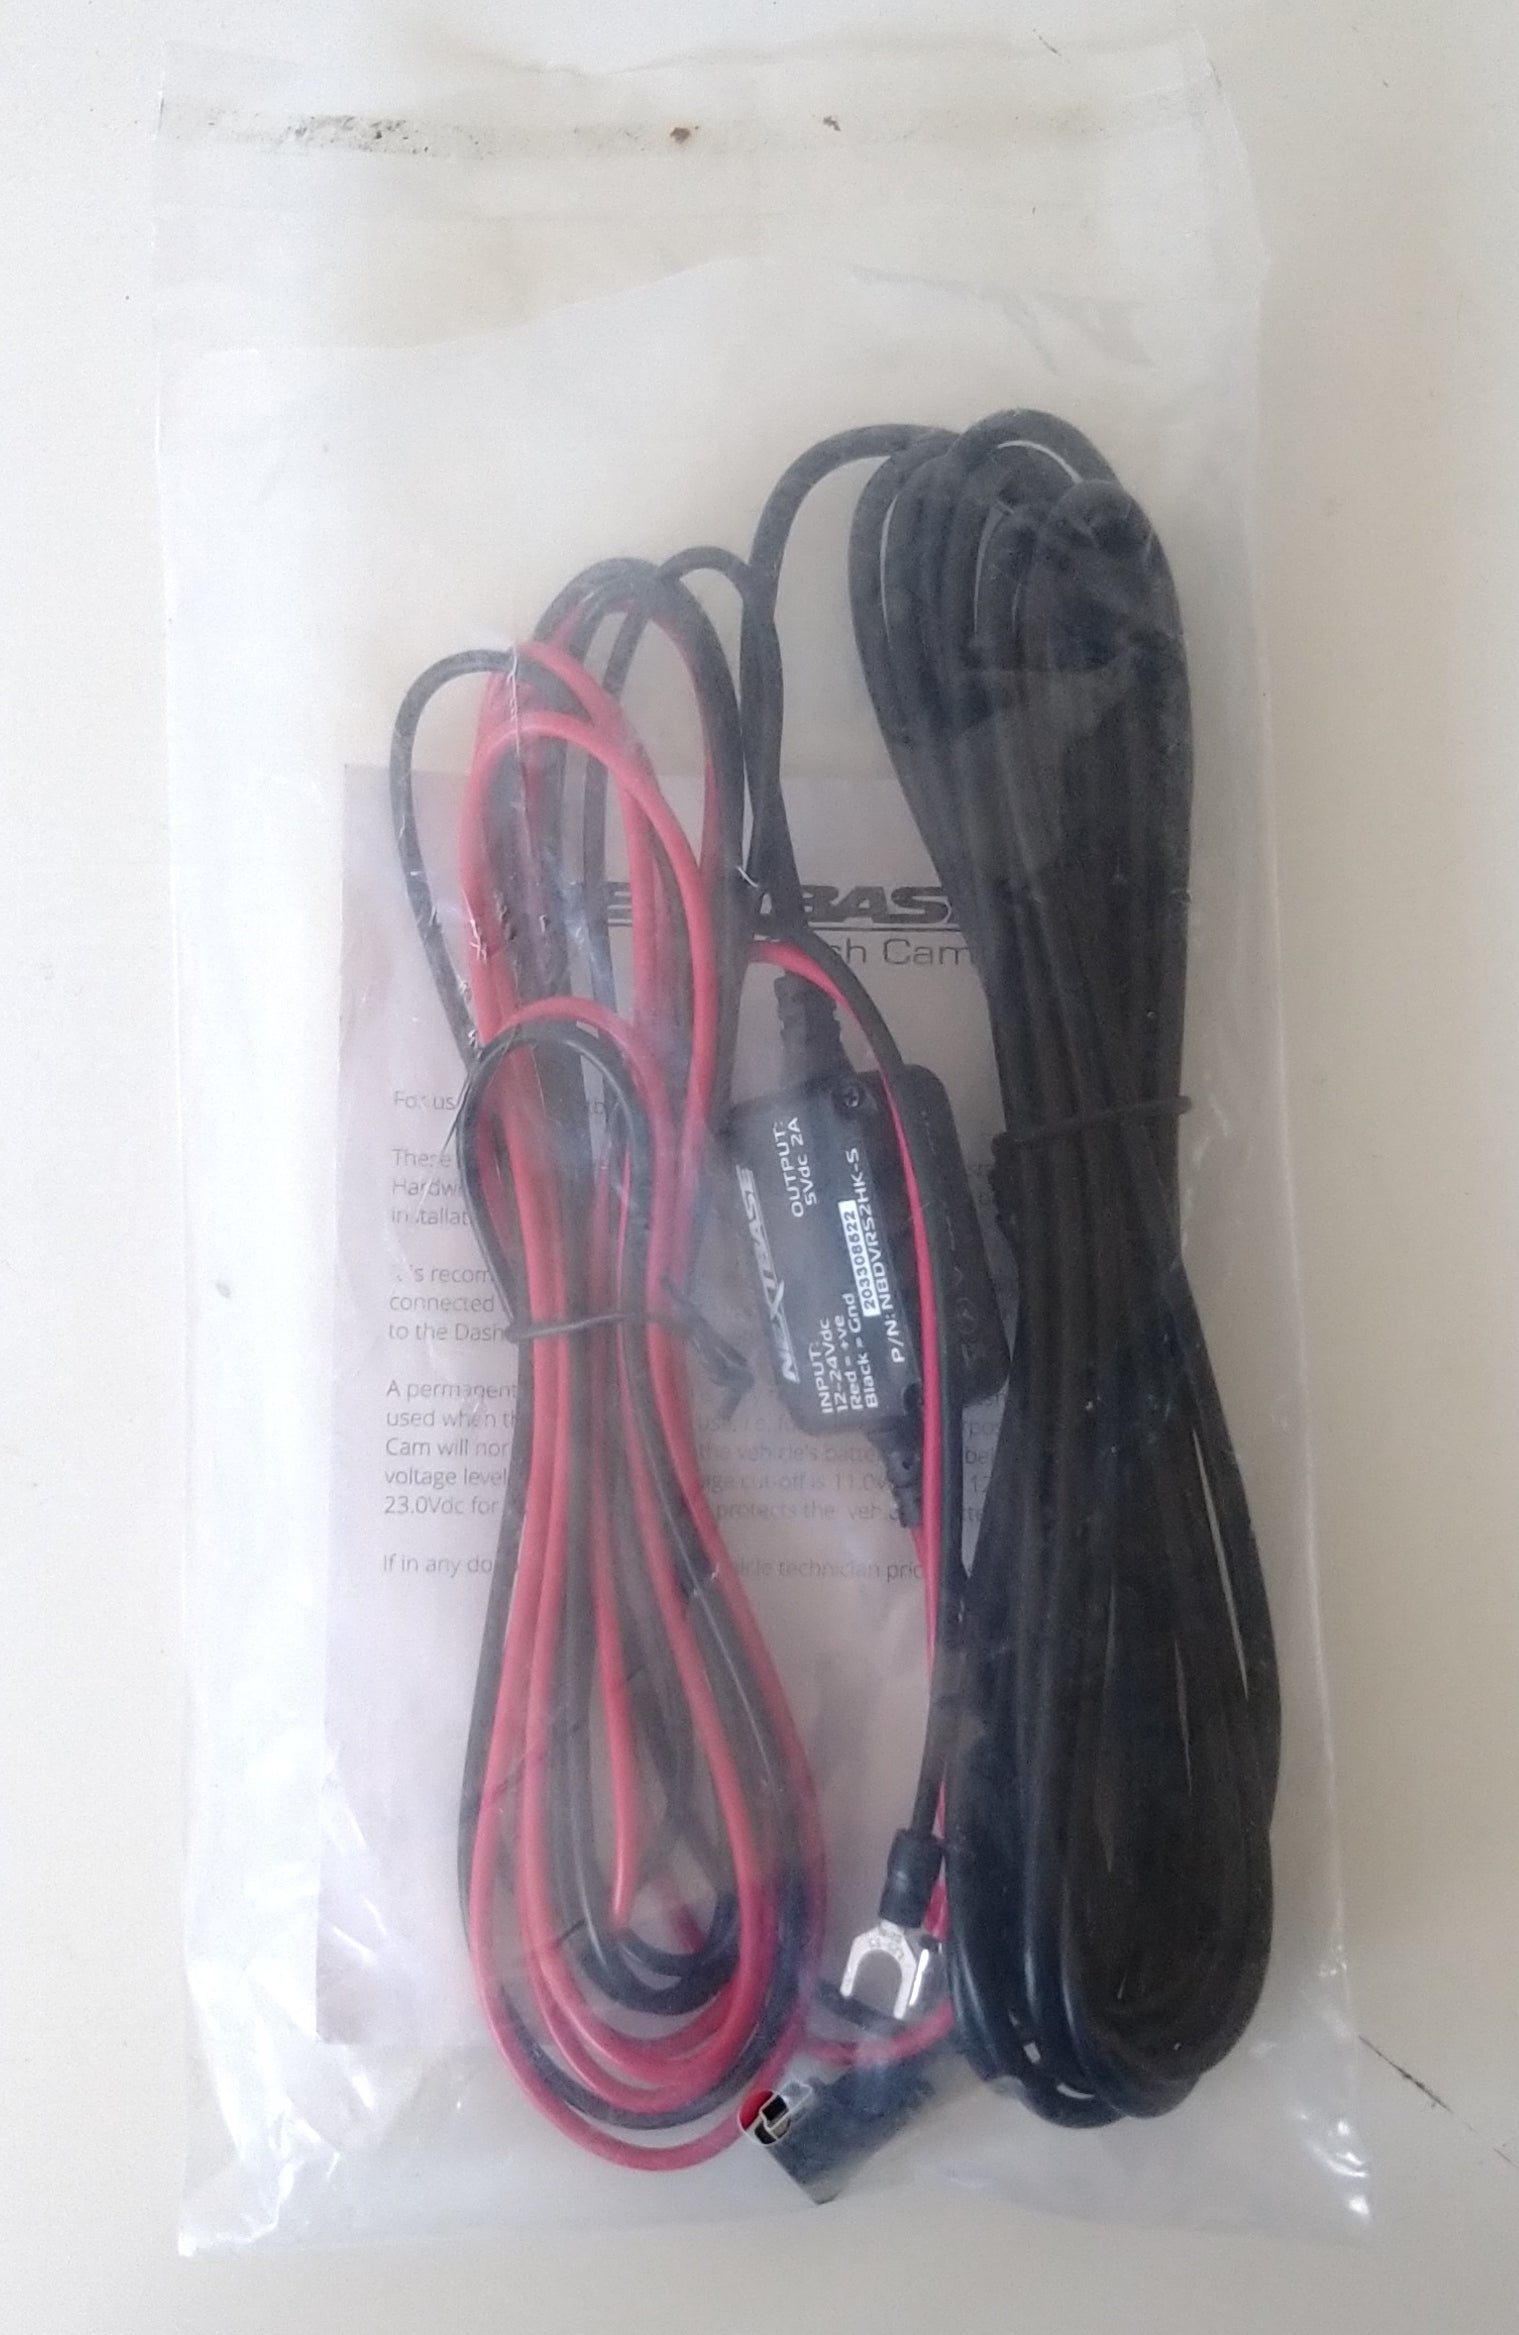 Hardwire Kit for all Nextbase Dash Cameras Black NBDVRS2HK - Best Buy